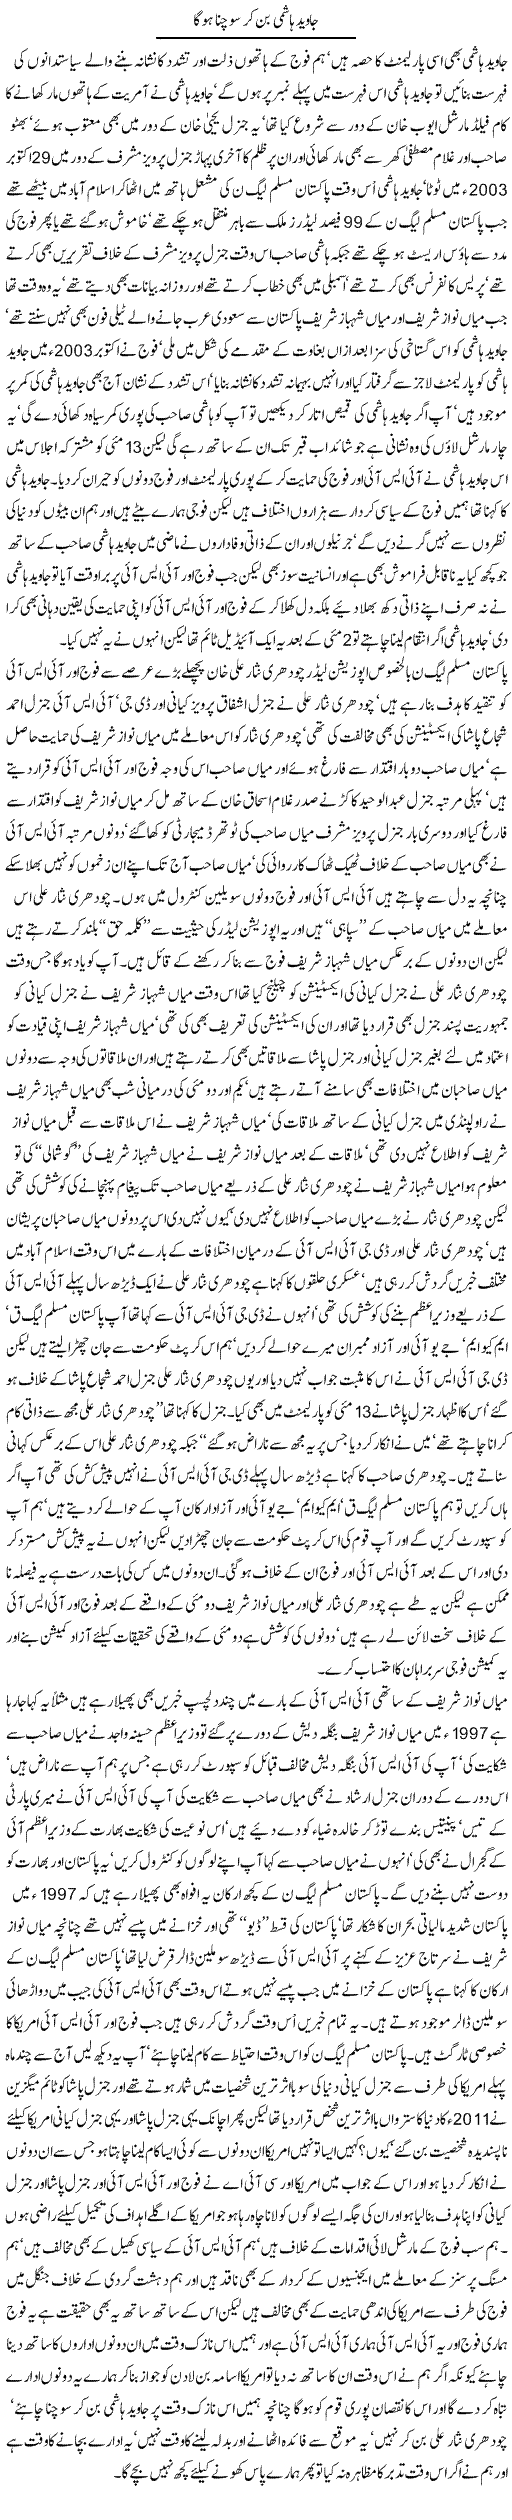 Javed Hashmi ban kar sochna ho ga - Javed Chaudhry